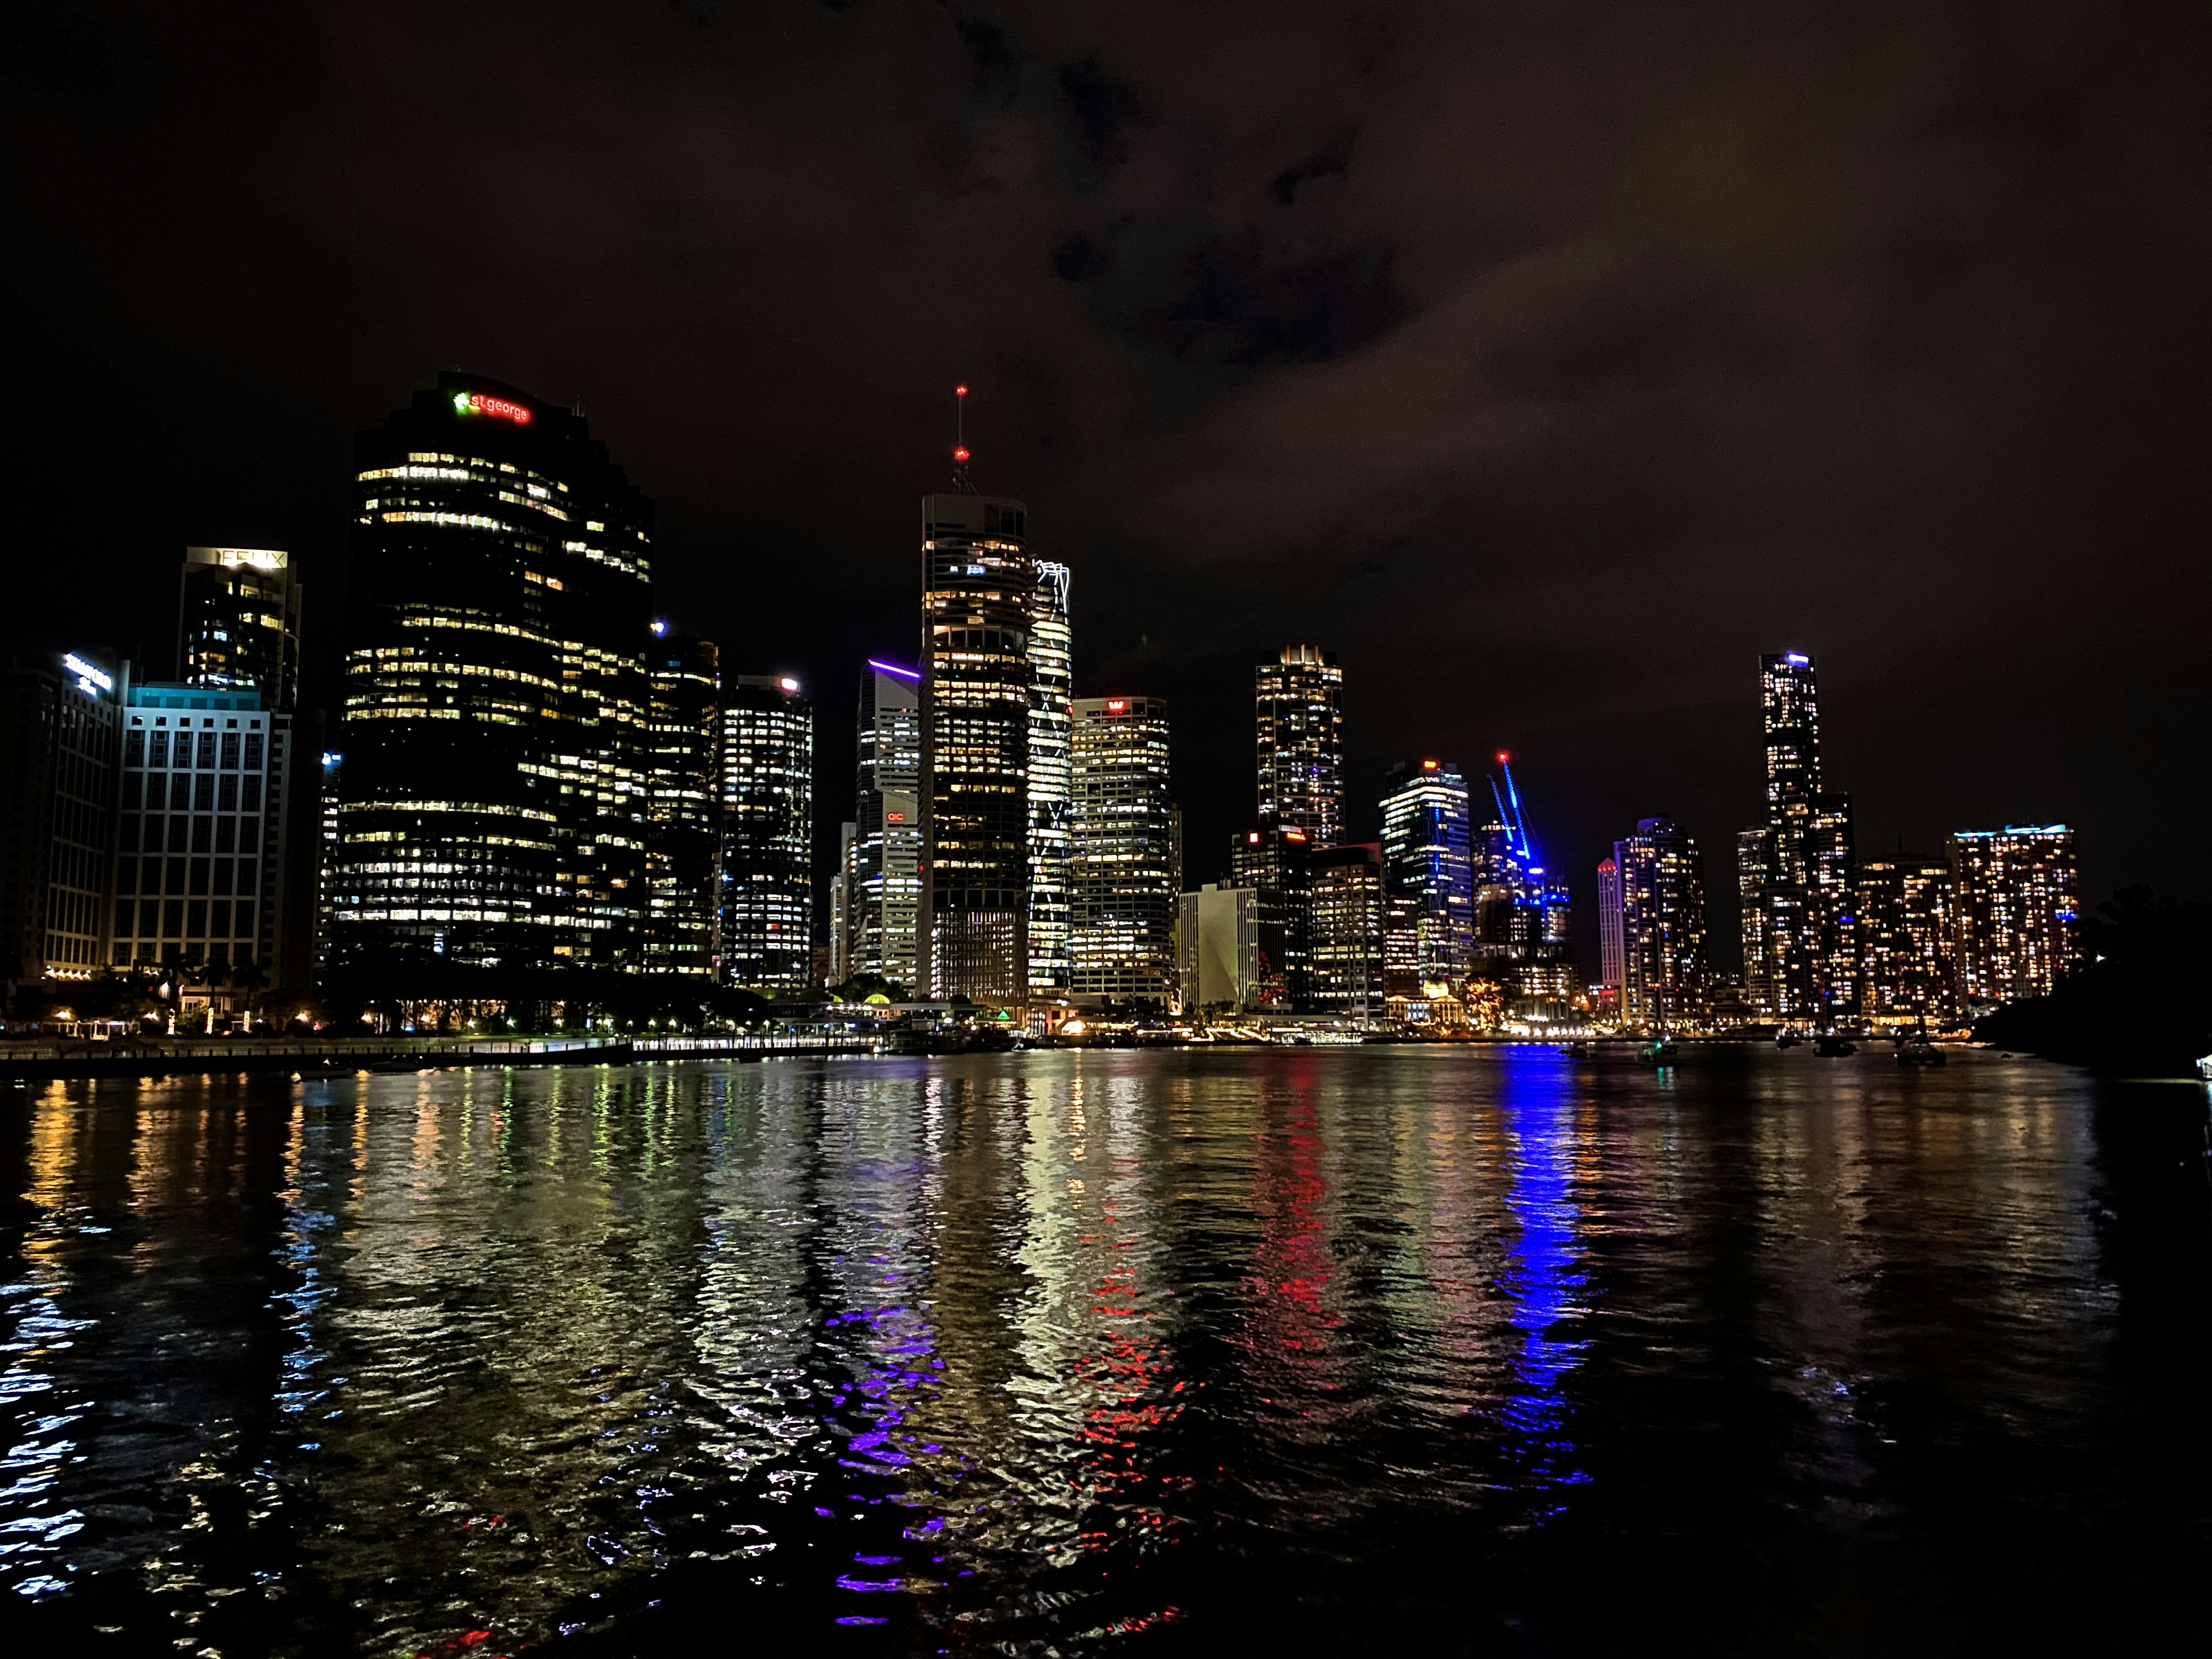 Brisbane City at night, taken on the iPhone 11